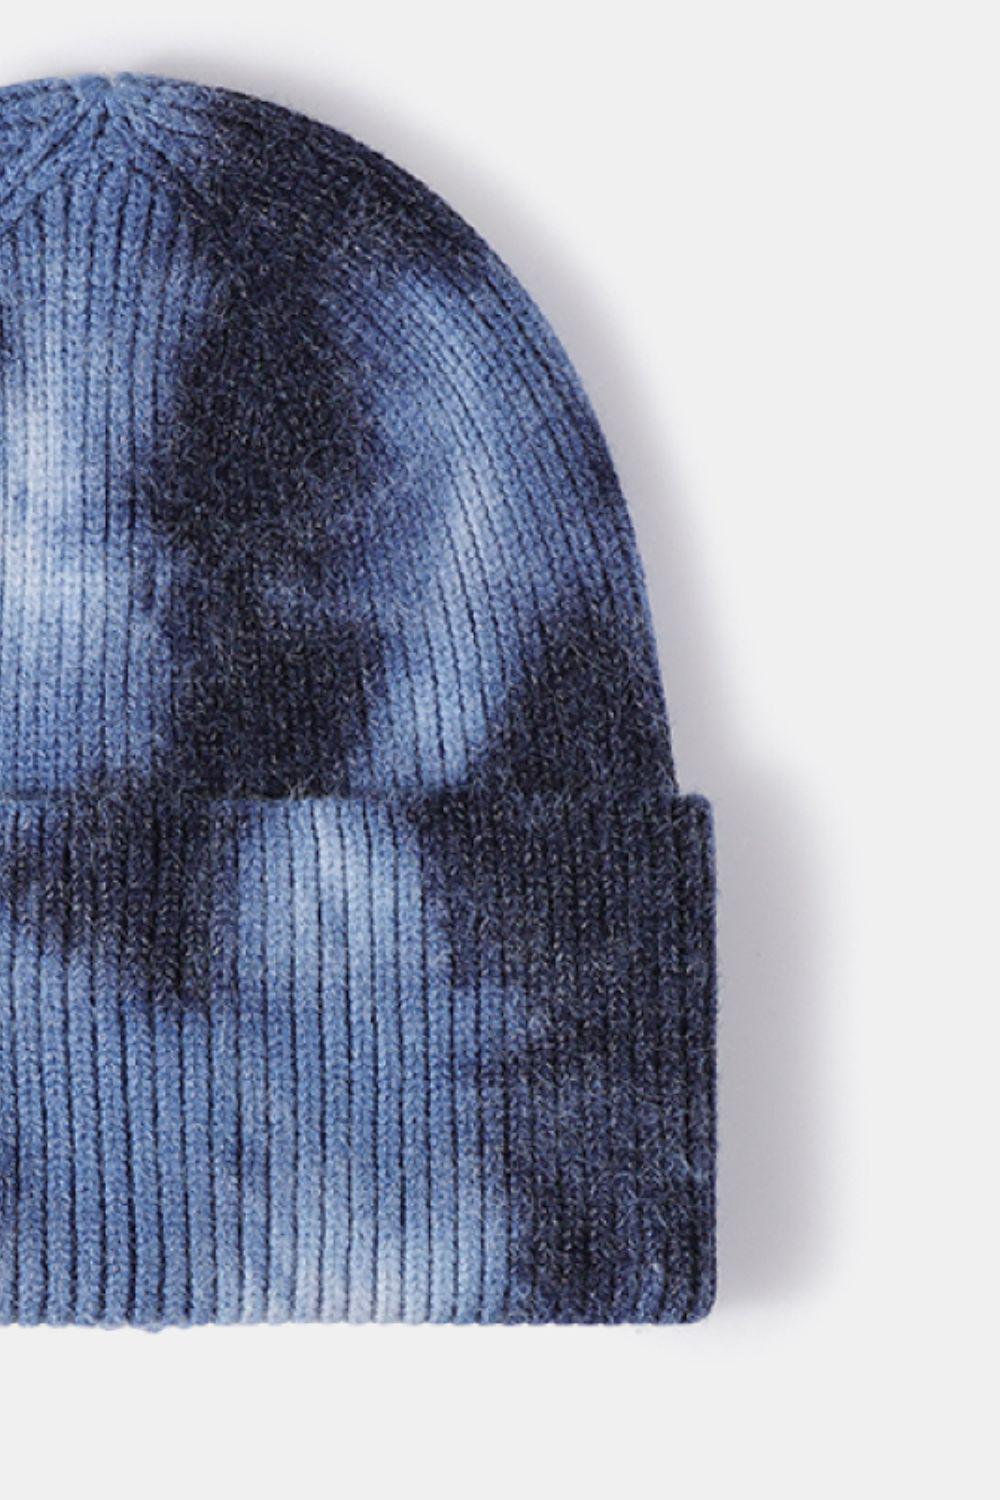 Tie-Dye Cuffed Rib-Knit Beanie Hat BLUE ZONE PLANET